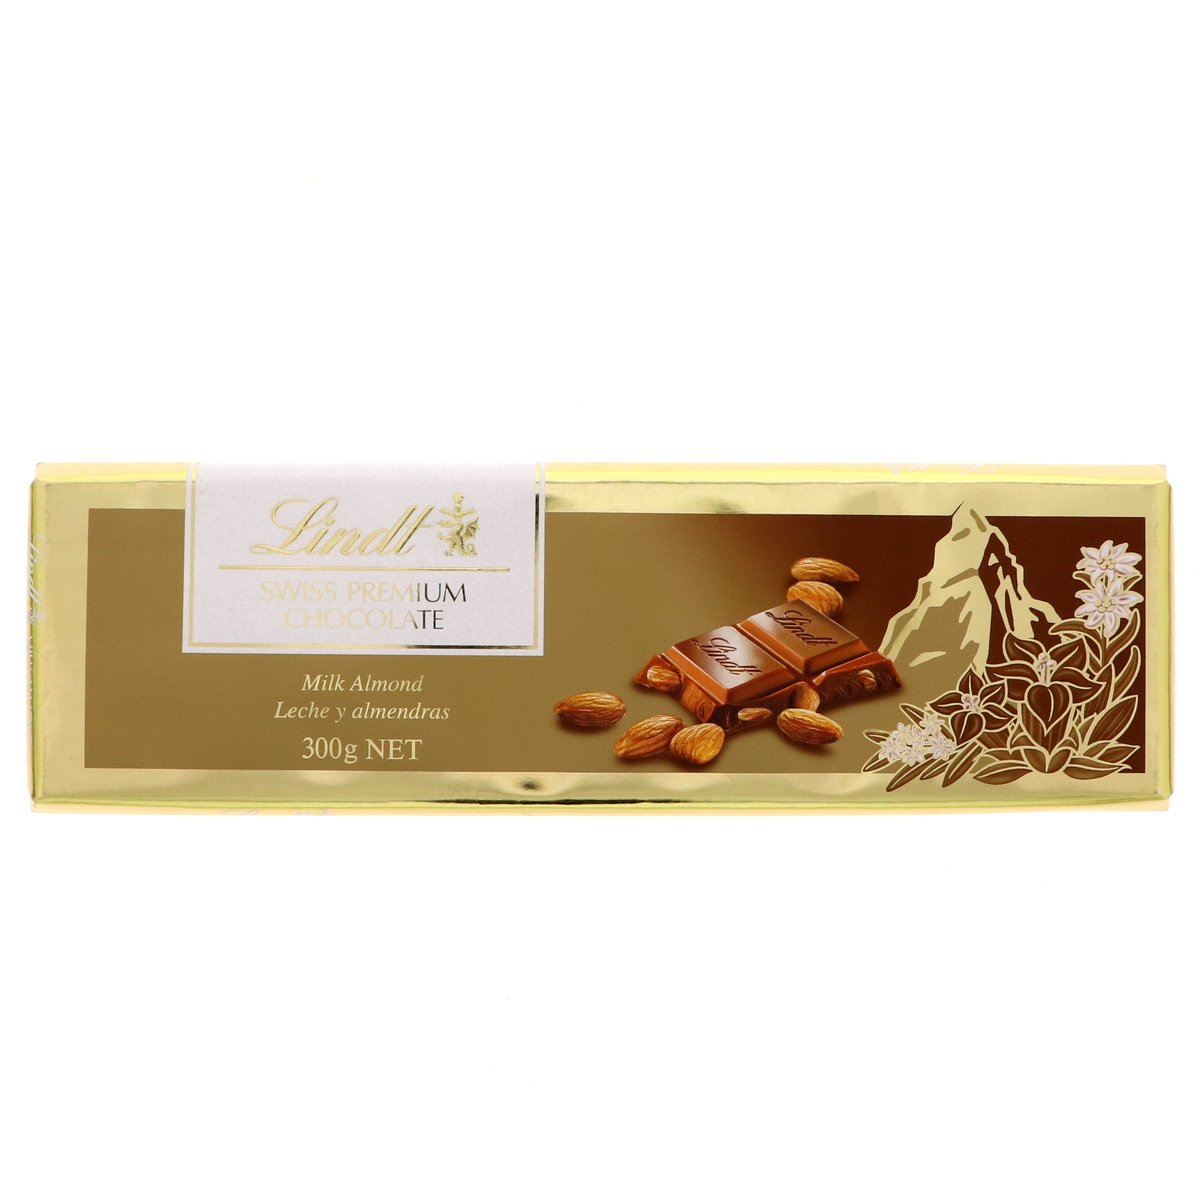 Lindt Swiss Premium Chocolate Milk Almond 300 g